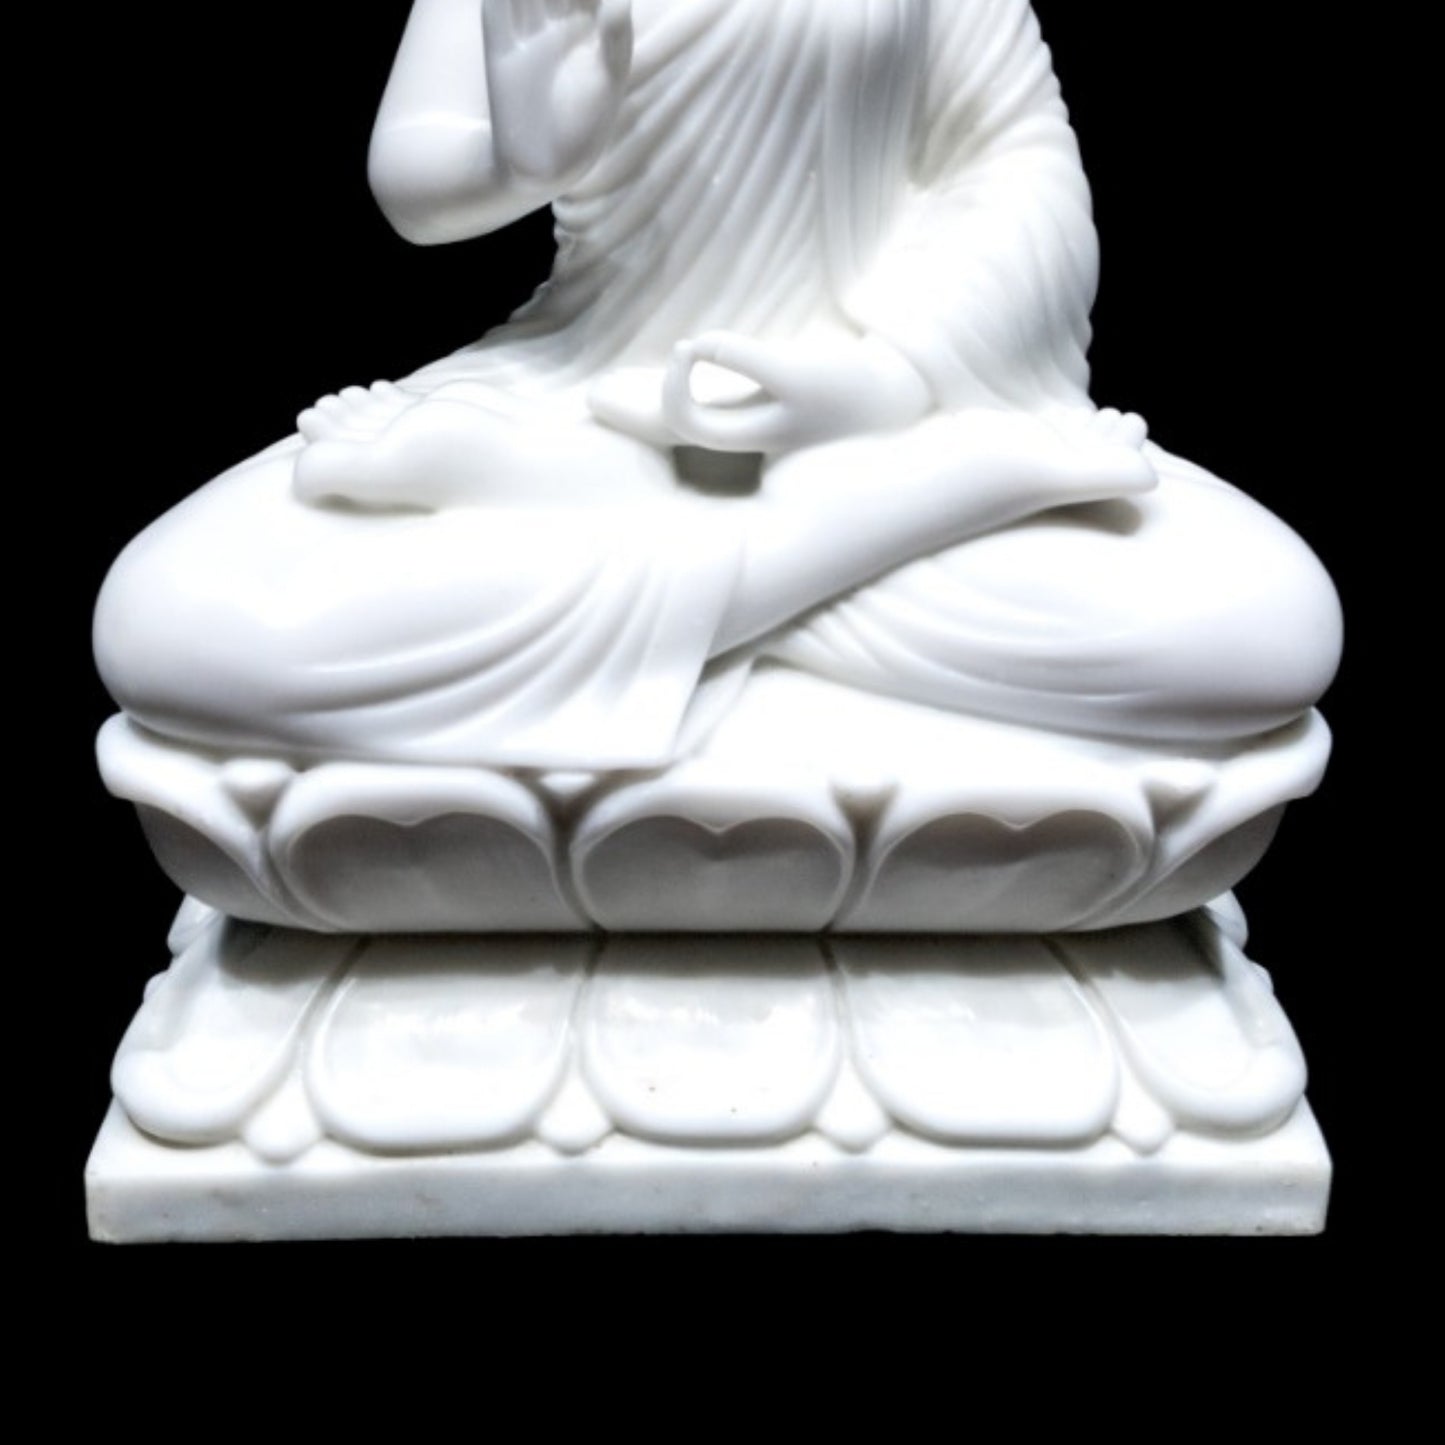 White Marble Buddha statue 24'' Special Spiritual Gift For Yoga Studio